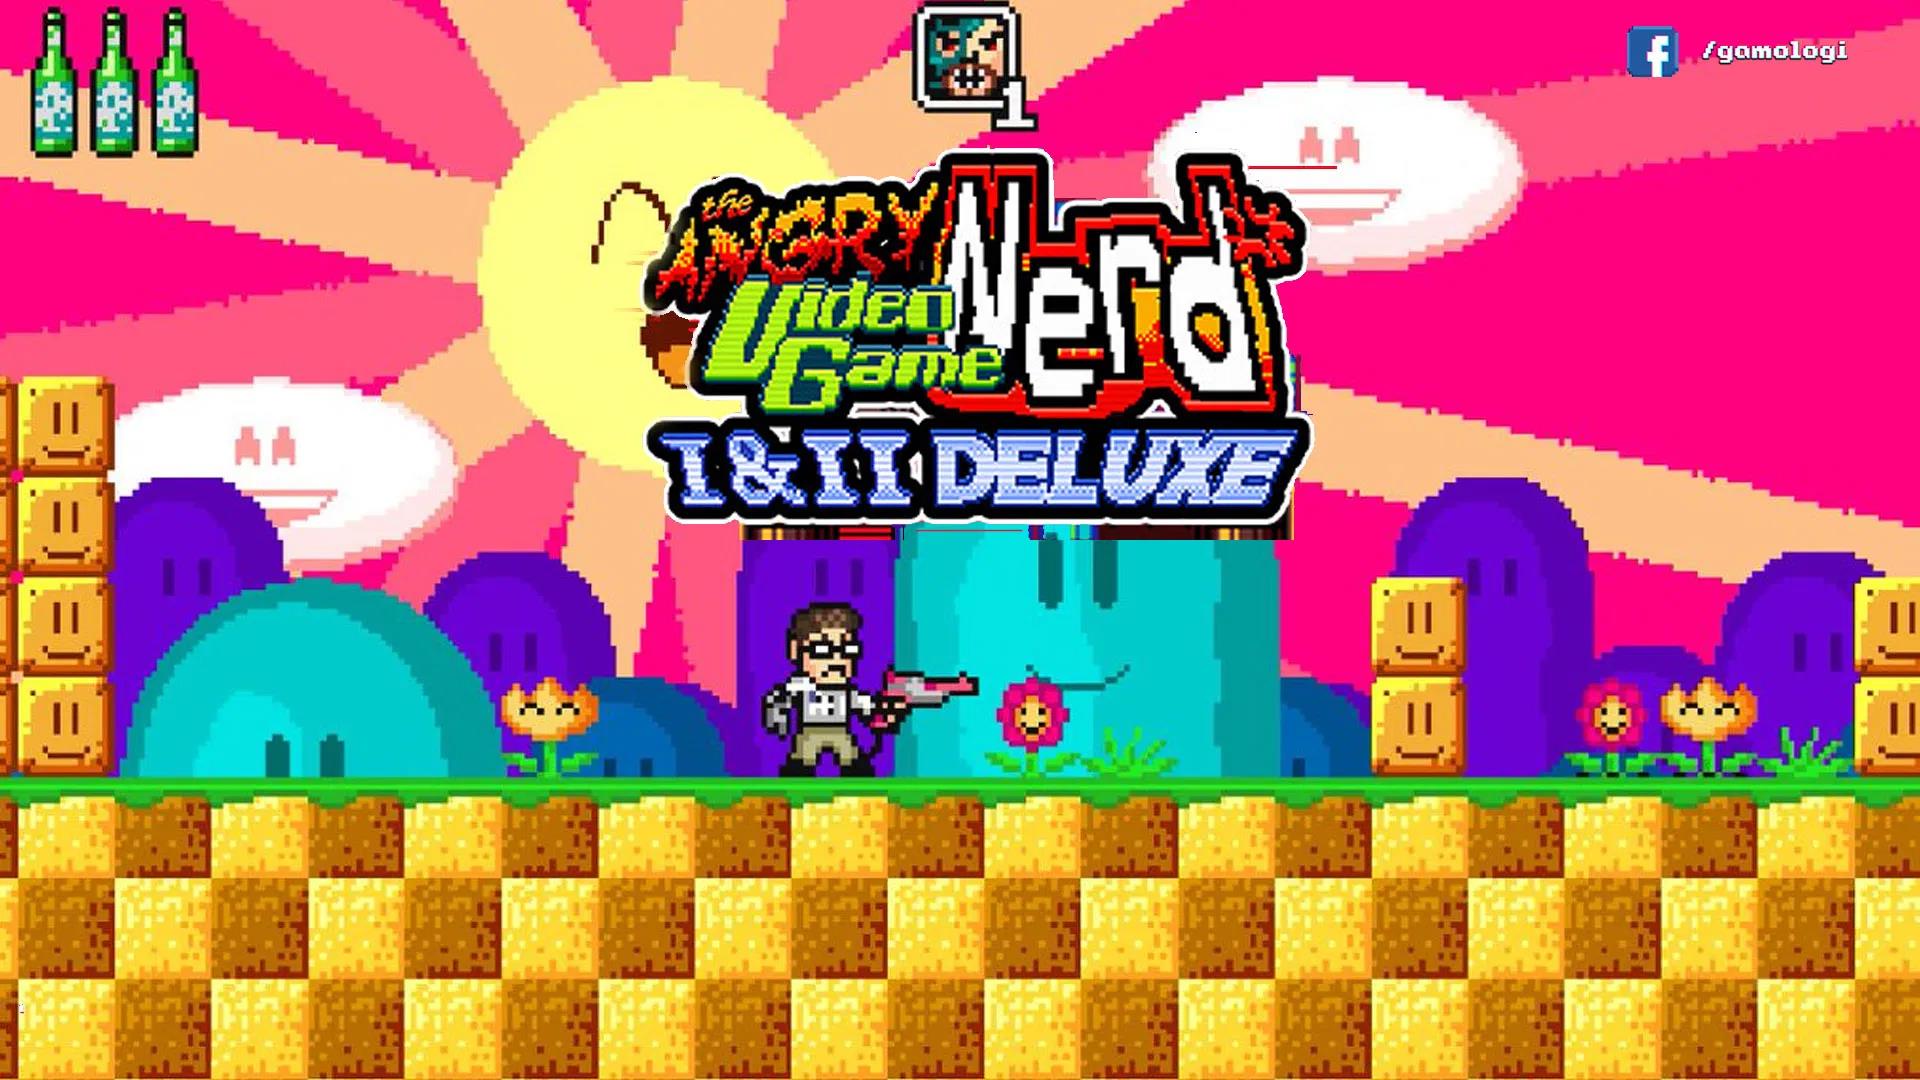 The Angry Video Game Nerd I & II Deluxe, confermata la remaster